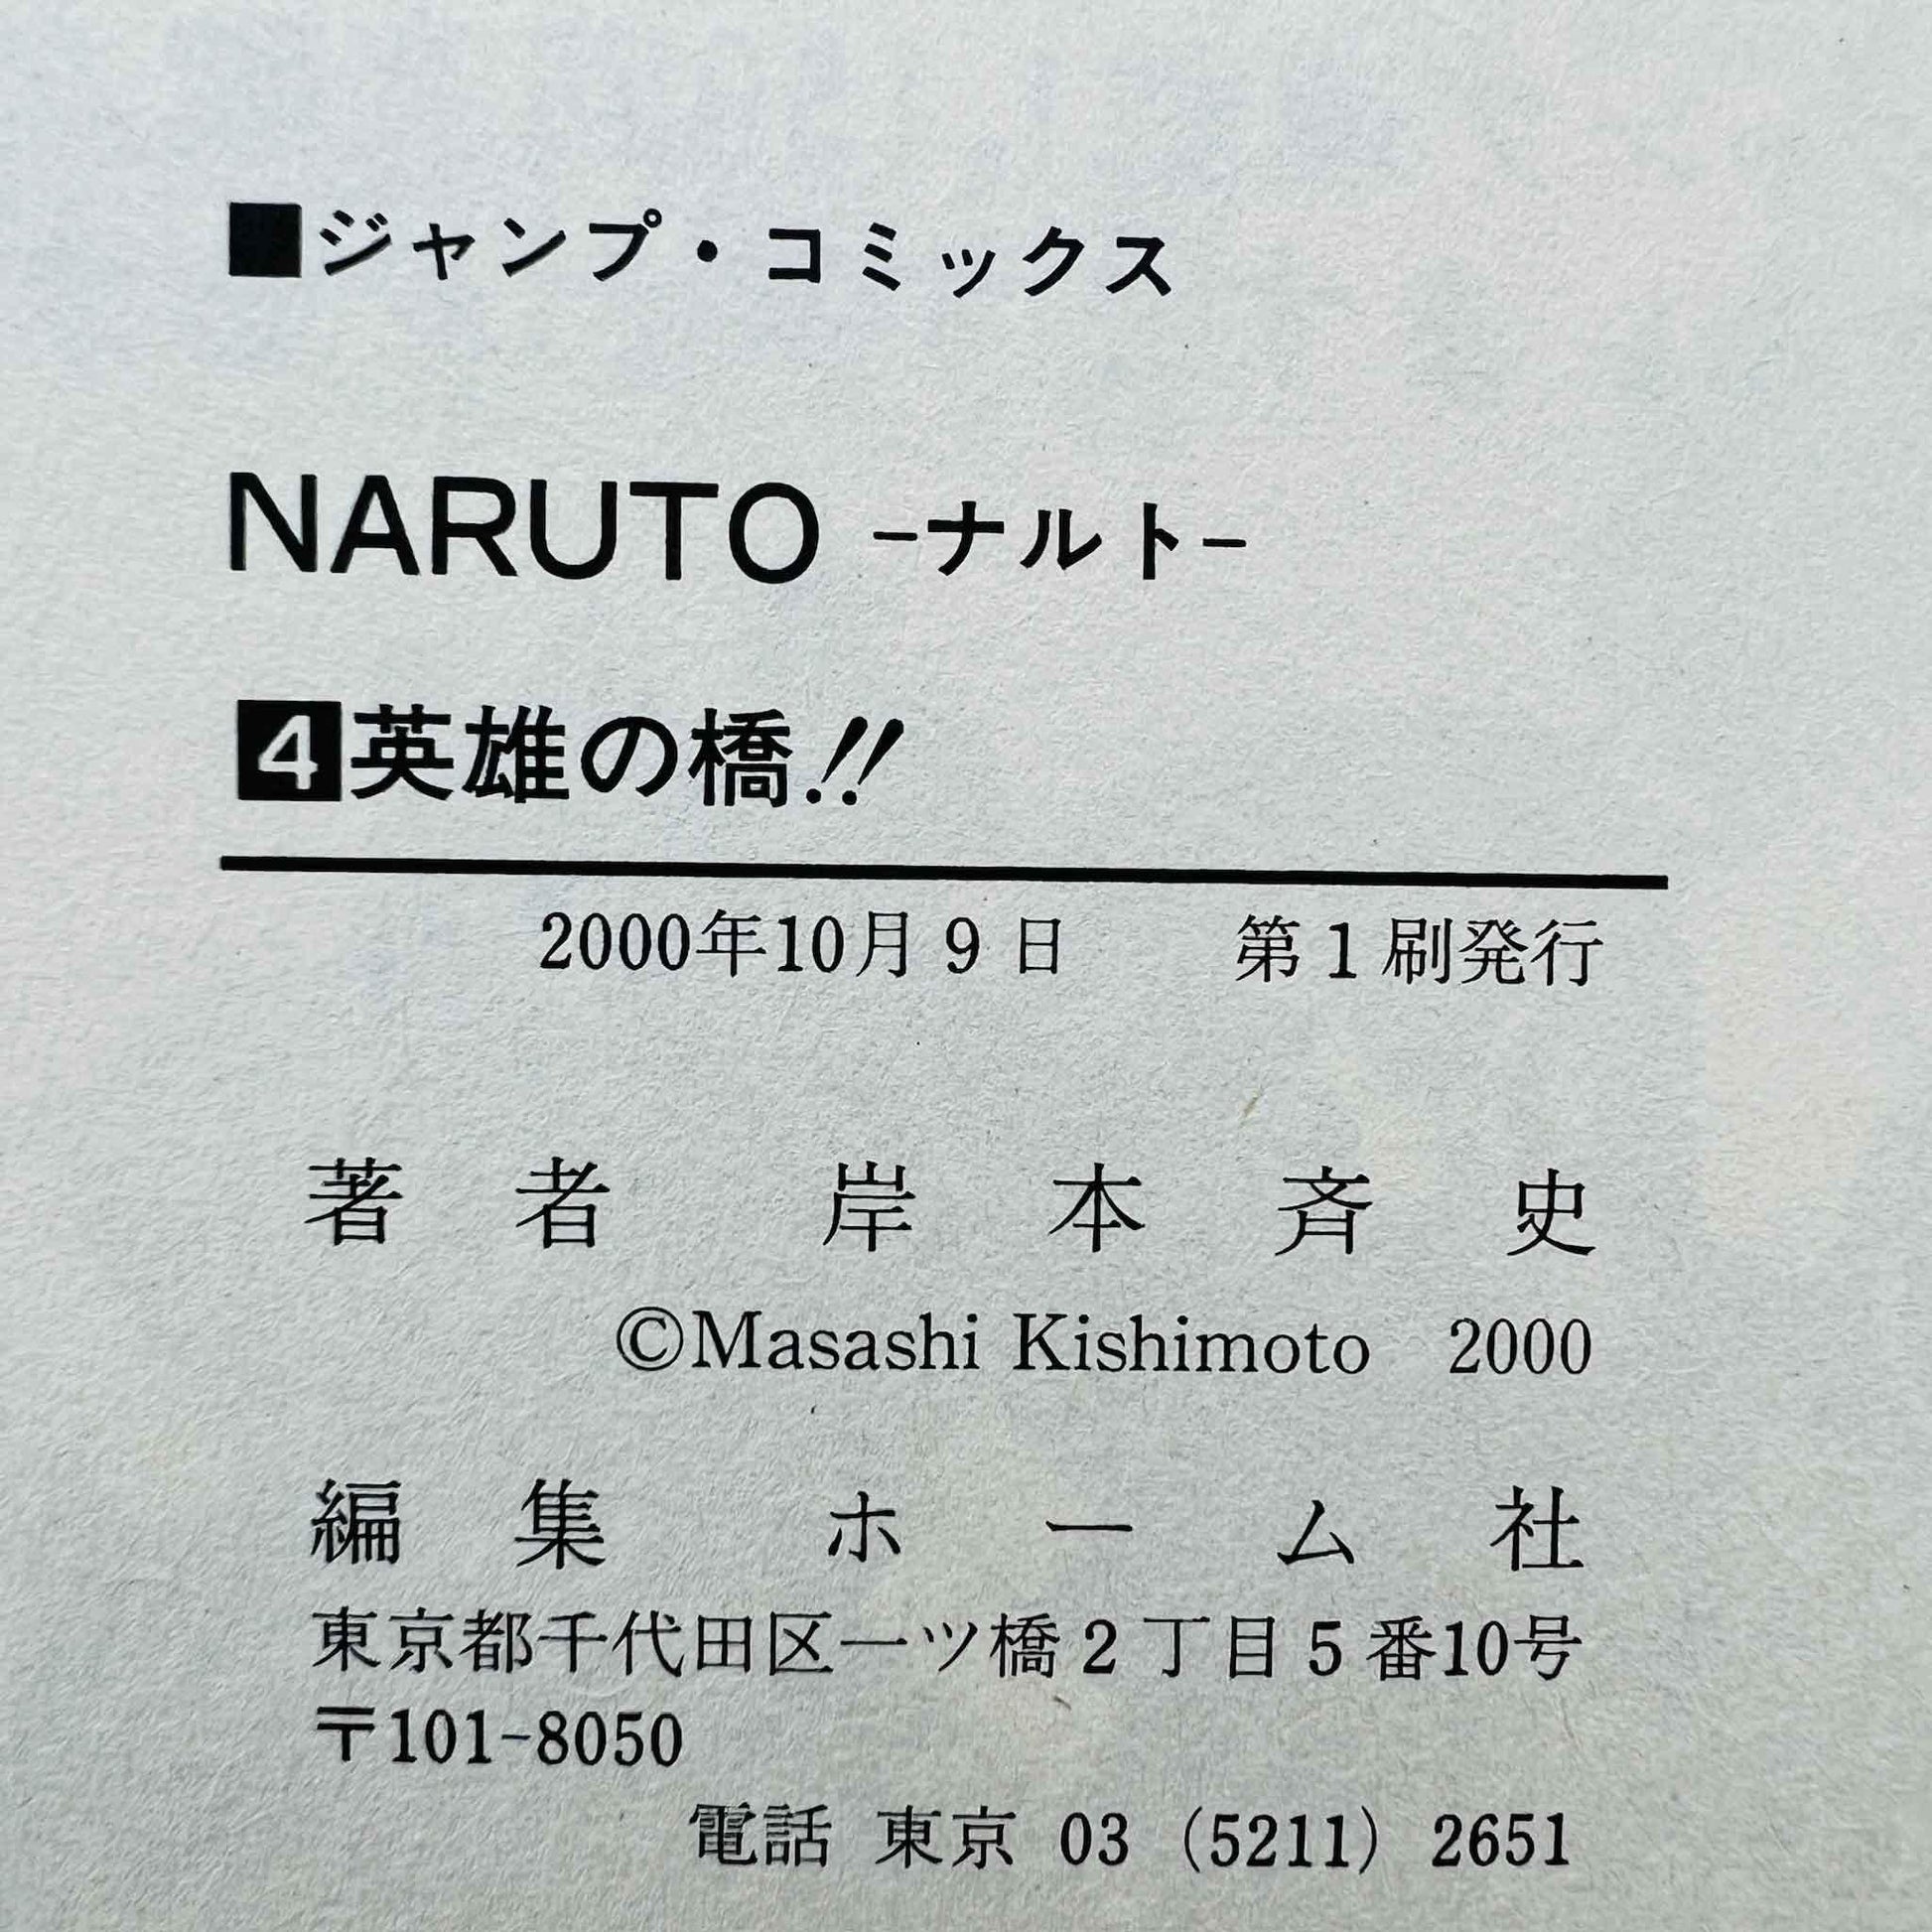 Naruto - Volume 04 - 1stPrint.net - 1st First Print Edition Manga Store - M-NARUTO-04-001